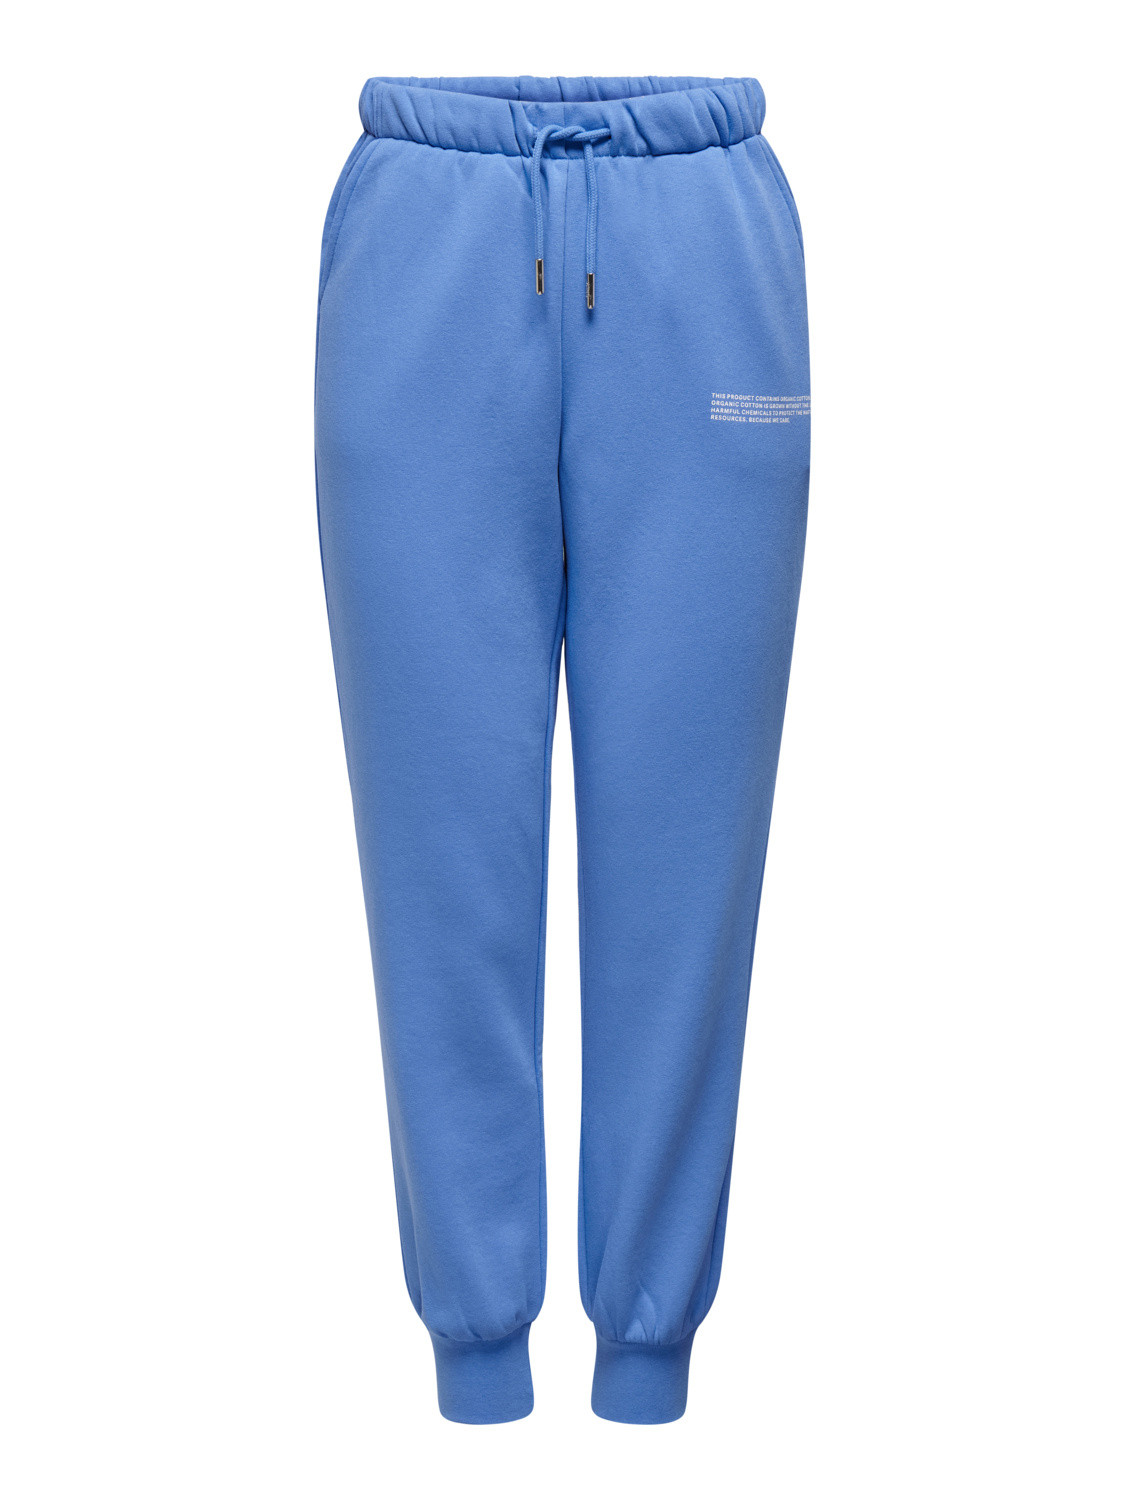 Pantaloni tuta donna, Azzurro, large image number 0